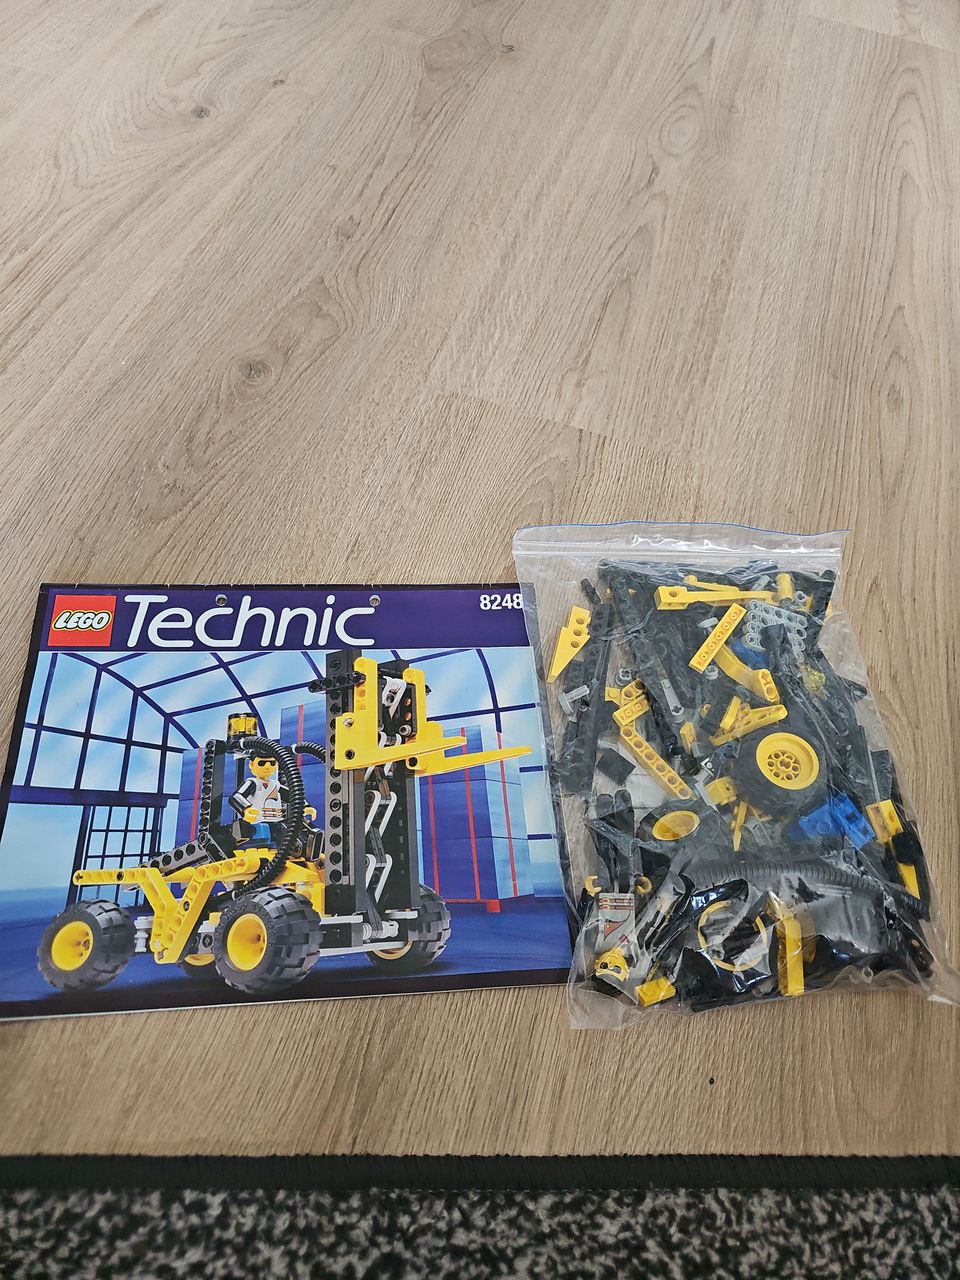 Lego Technic 8248